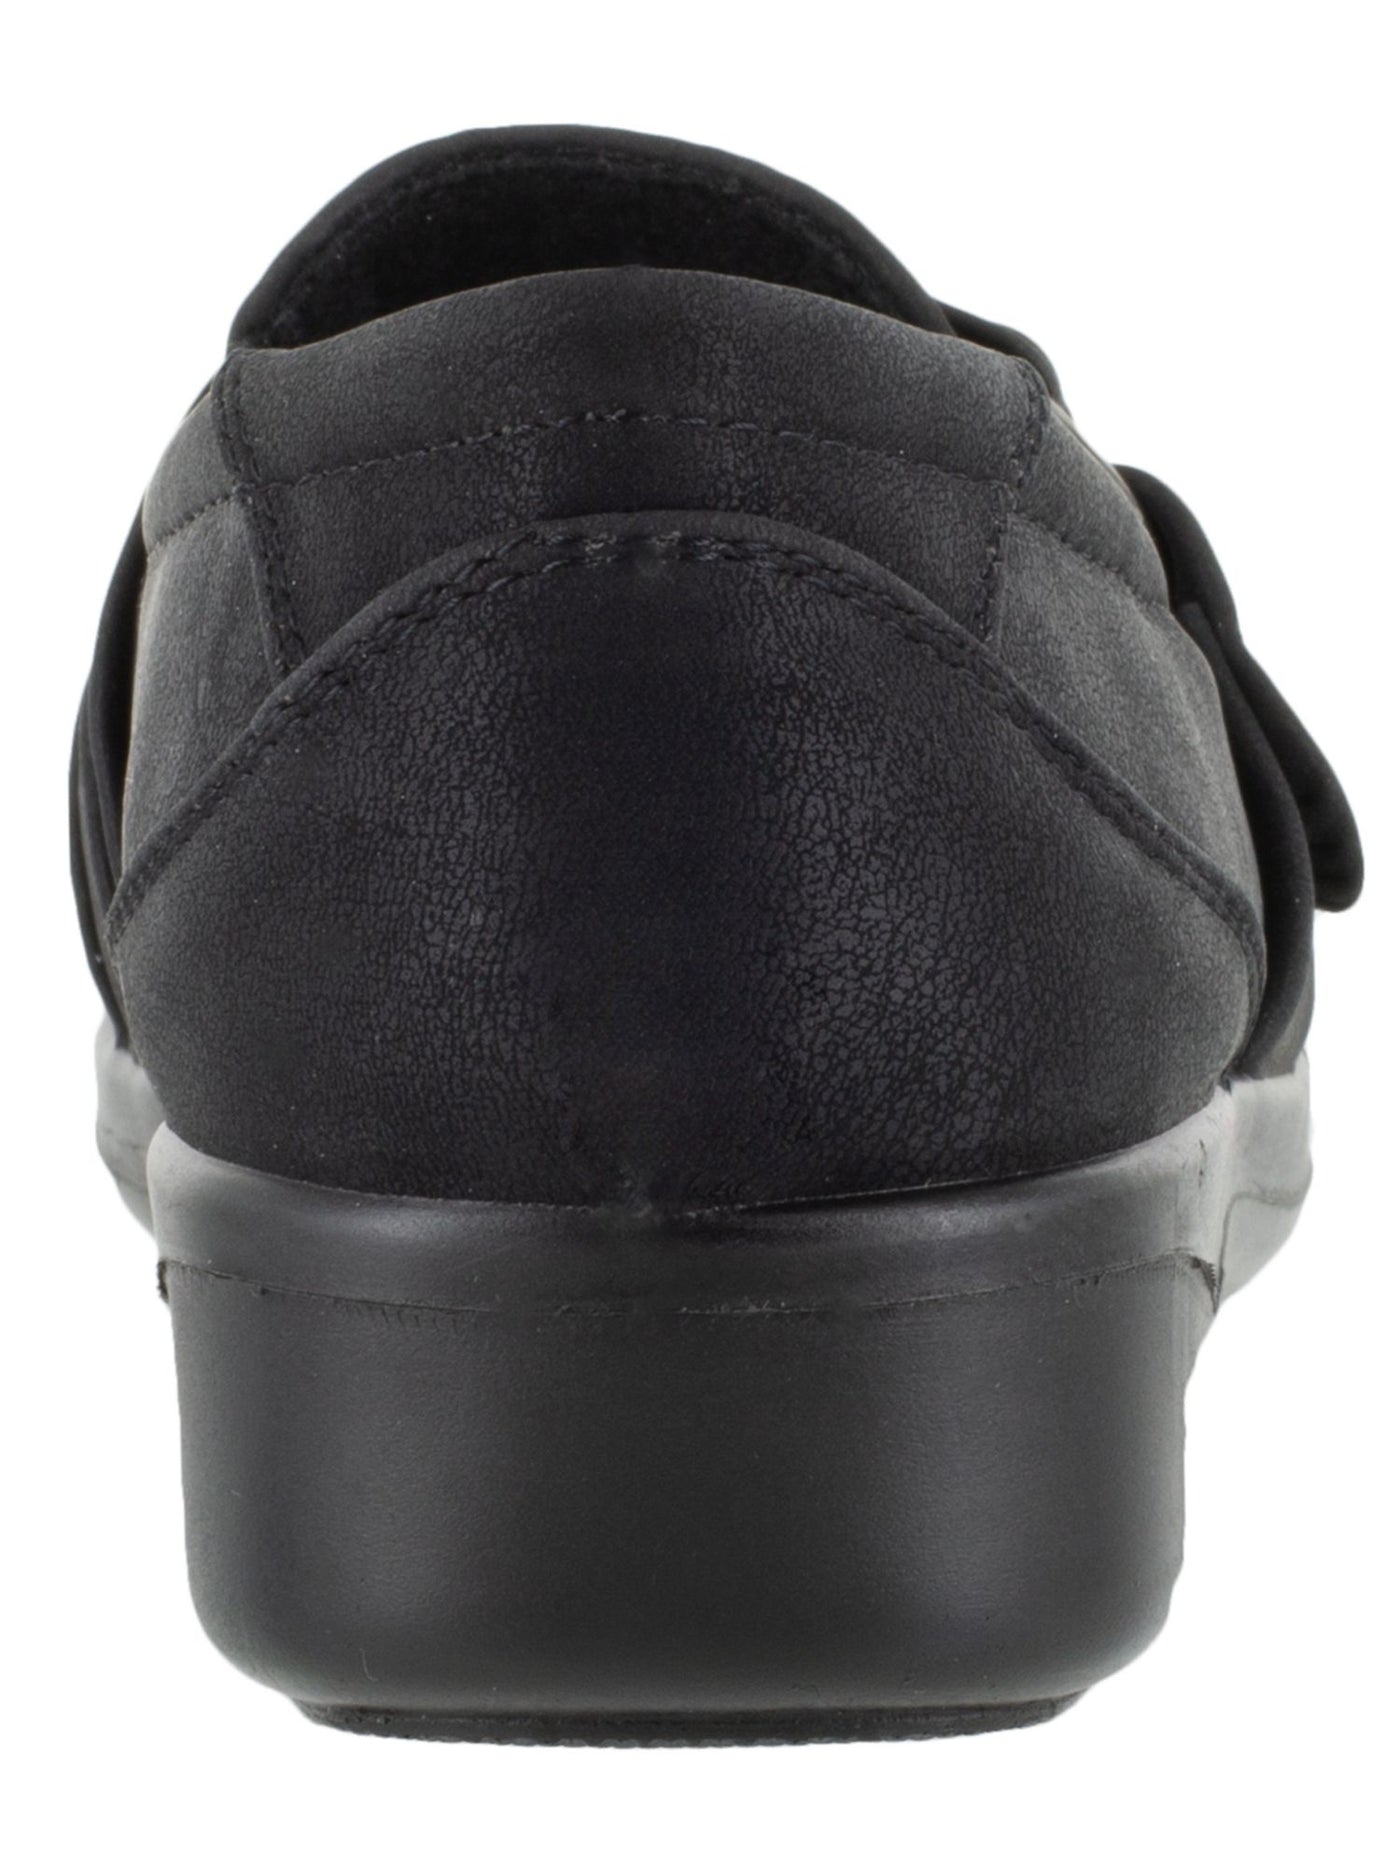 EASY STREET Womens Black 1/2" Platform Metal Hardware Cushioned Ruffled Tully Round Toe Wedge Slip On Flats Shoes 7.5 M